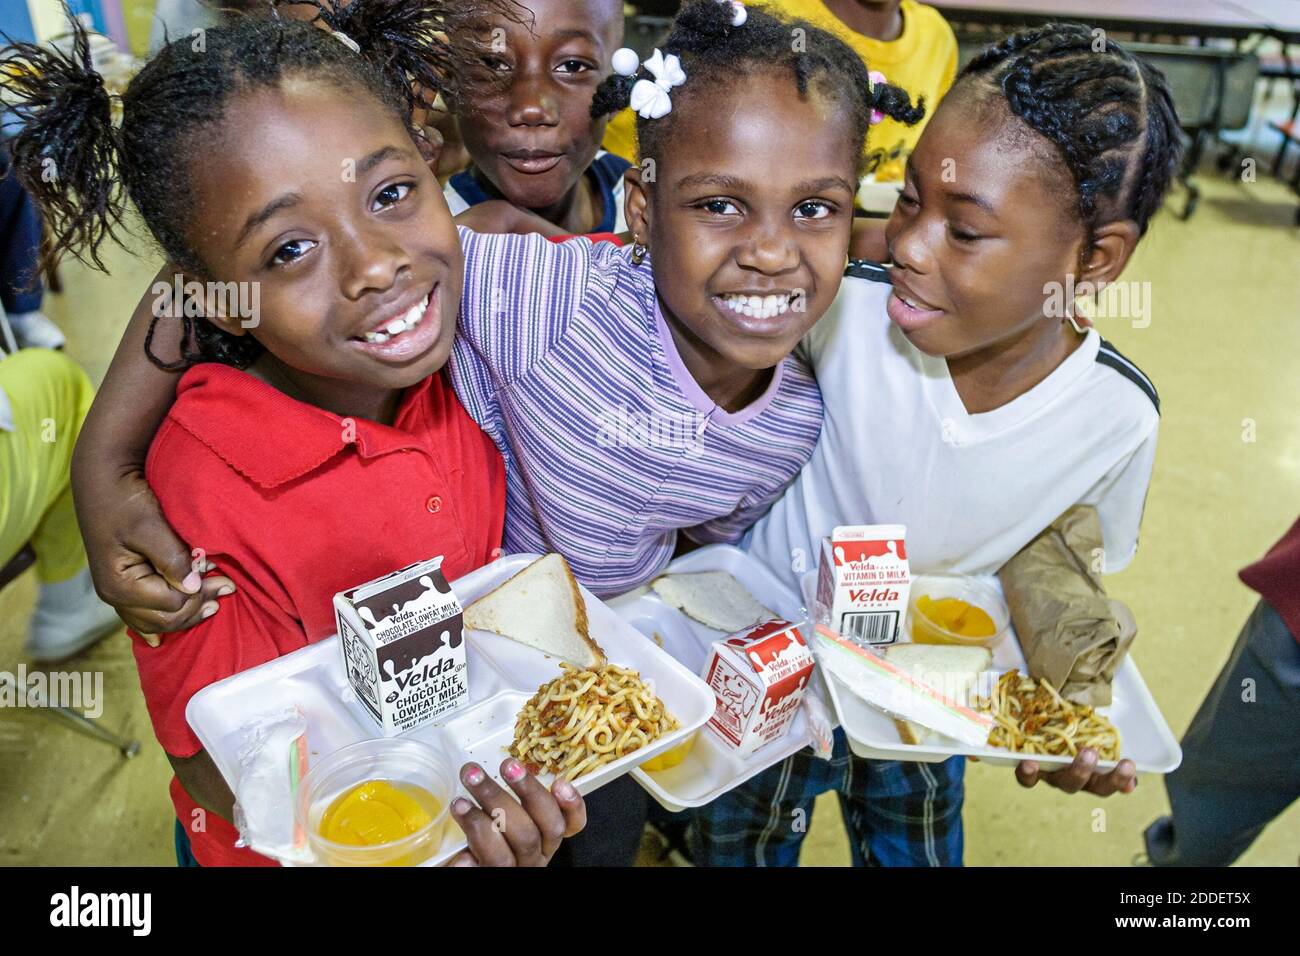 Miami Florida, Little Haiti Edison Park Elementary School, estudiantes niñas negras amigos cafetería bandeja de almuerzo, Foto de stock